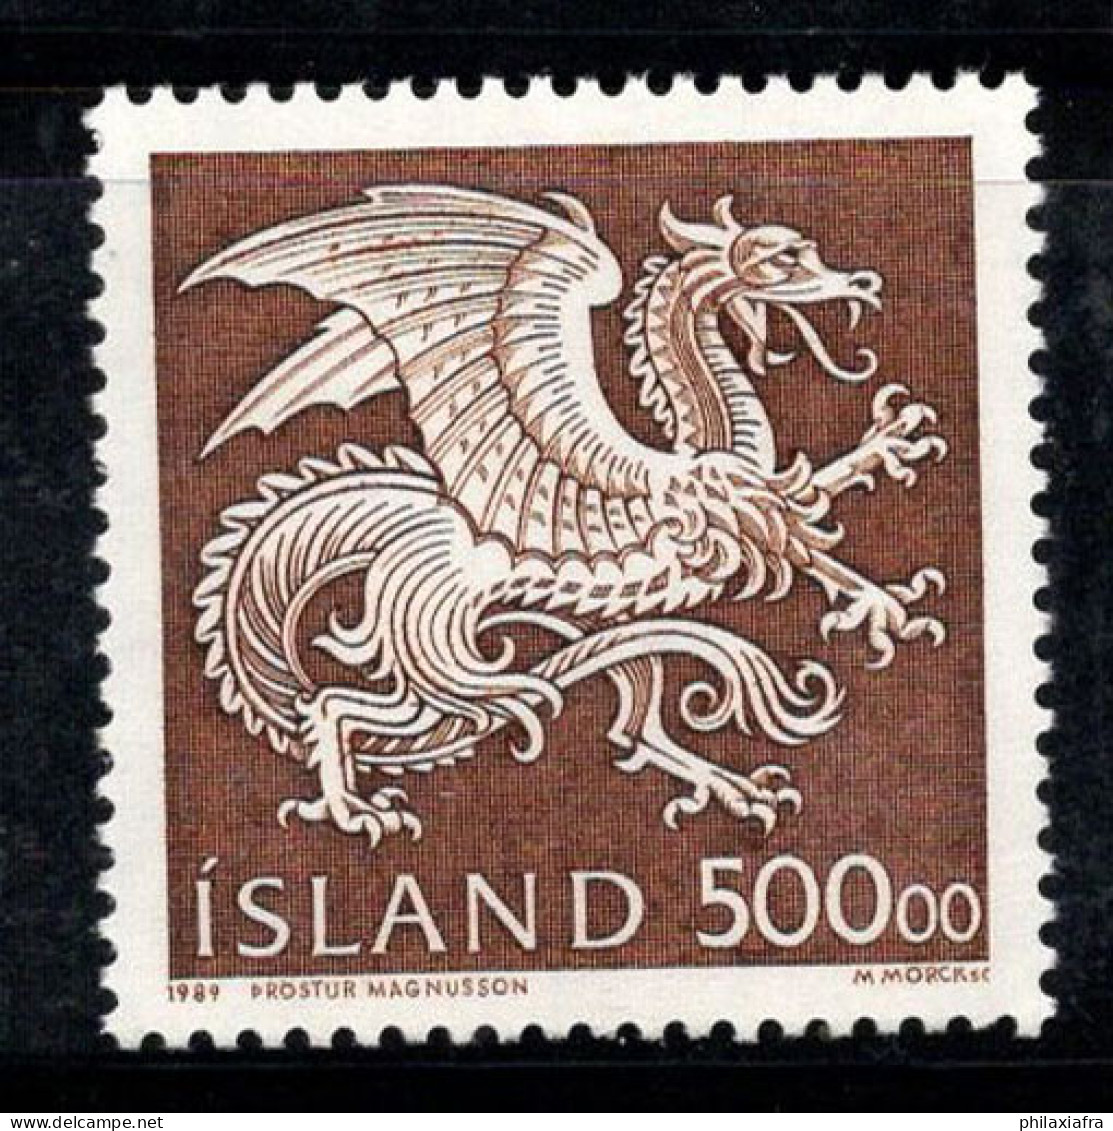 Islande 1989 Mi. 703 Neuf ** 100% 500, Dragon, Crête - Unused Stamps